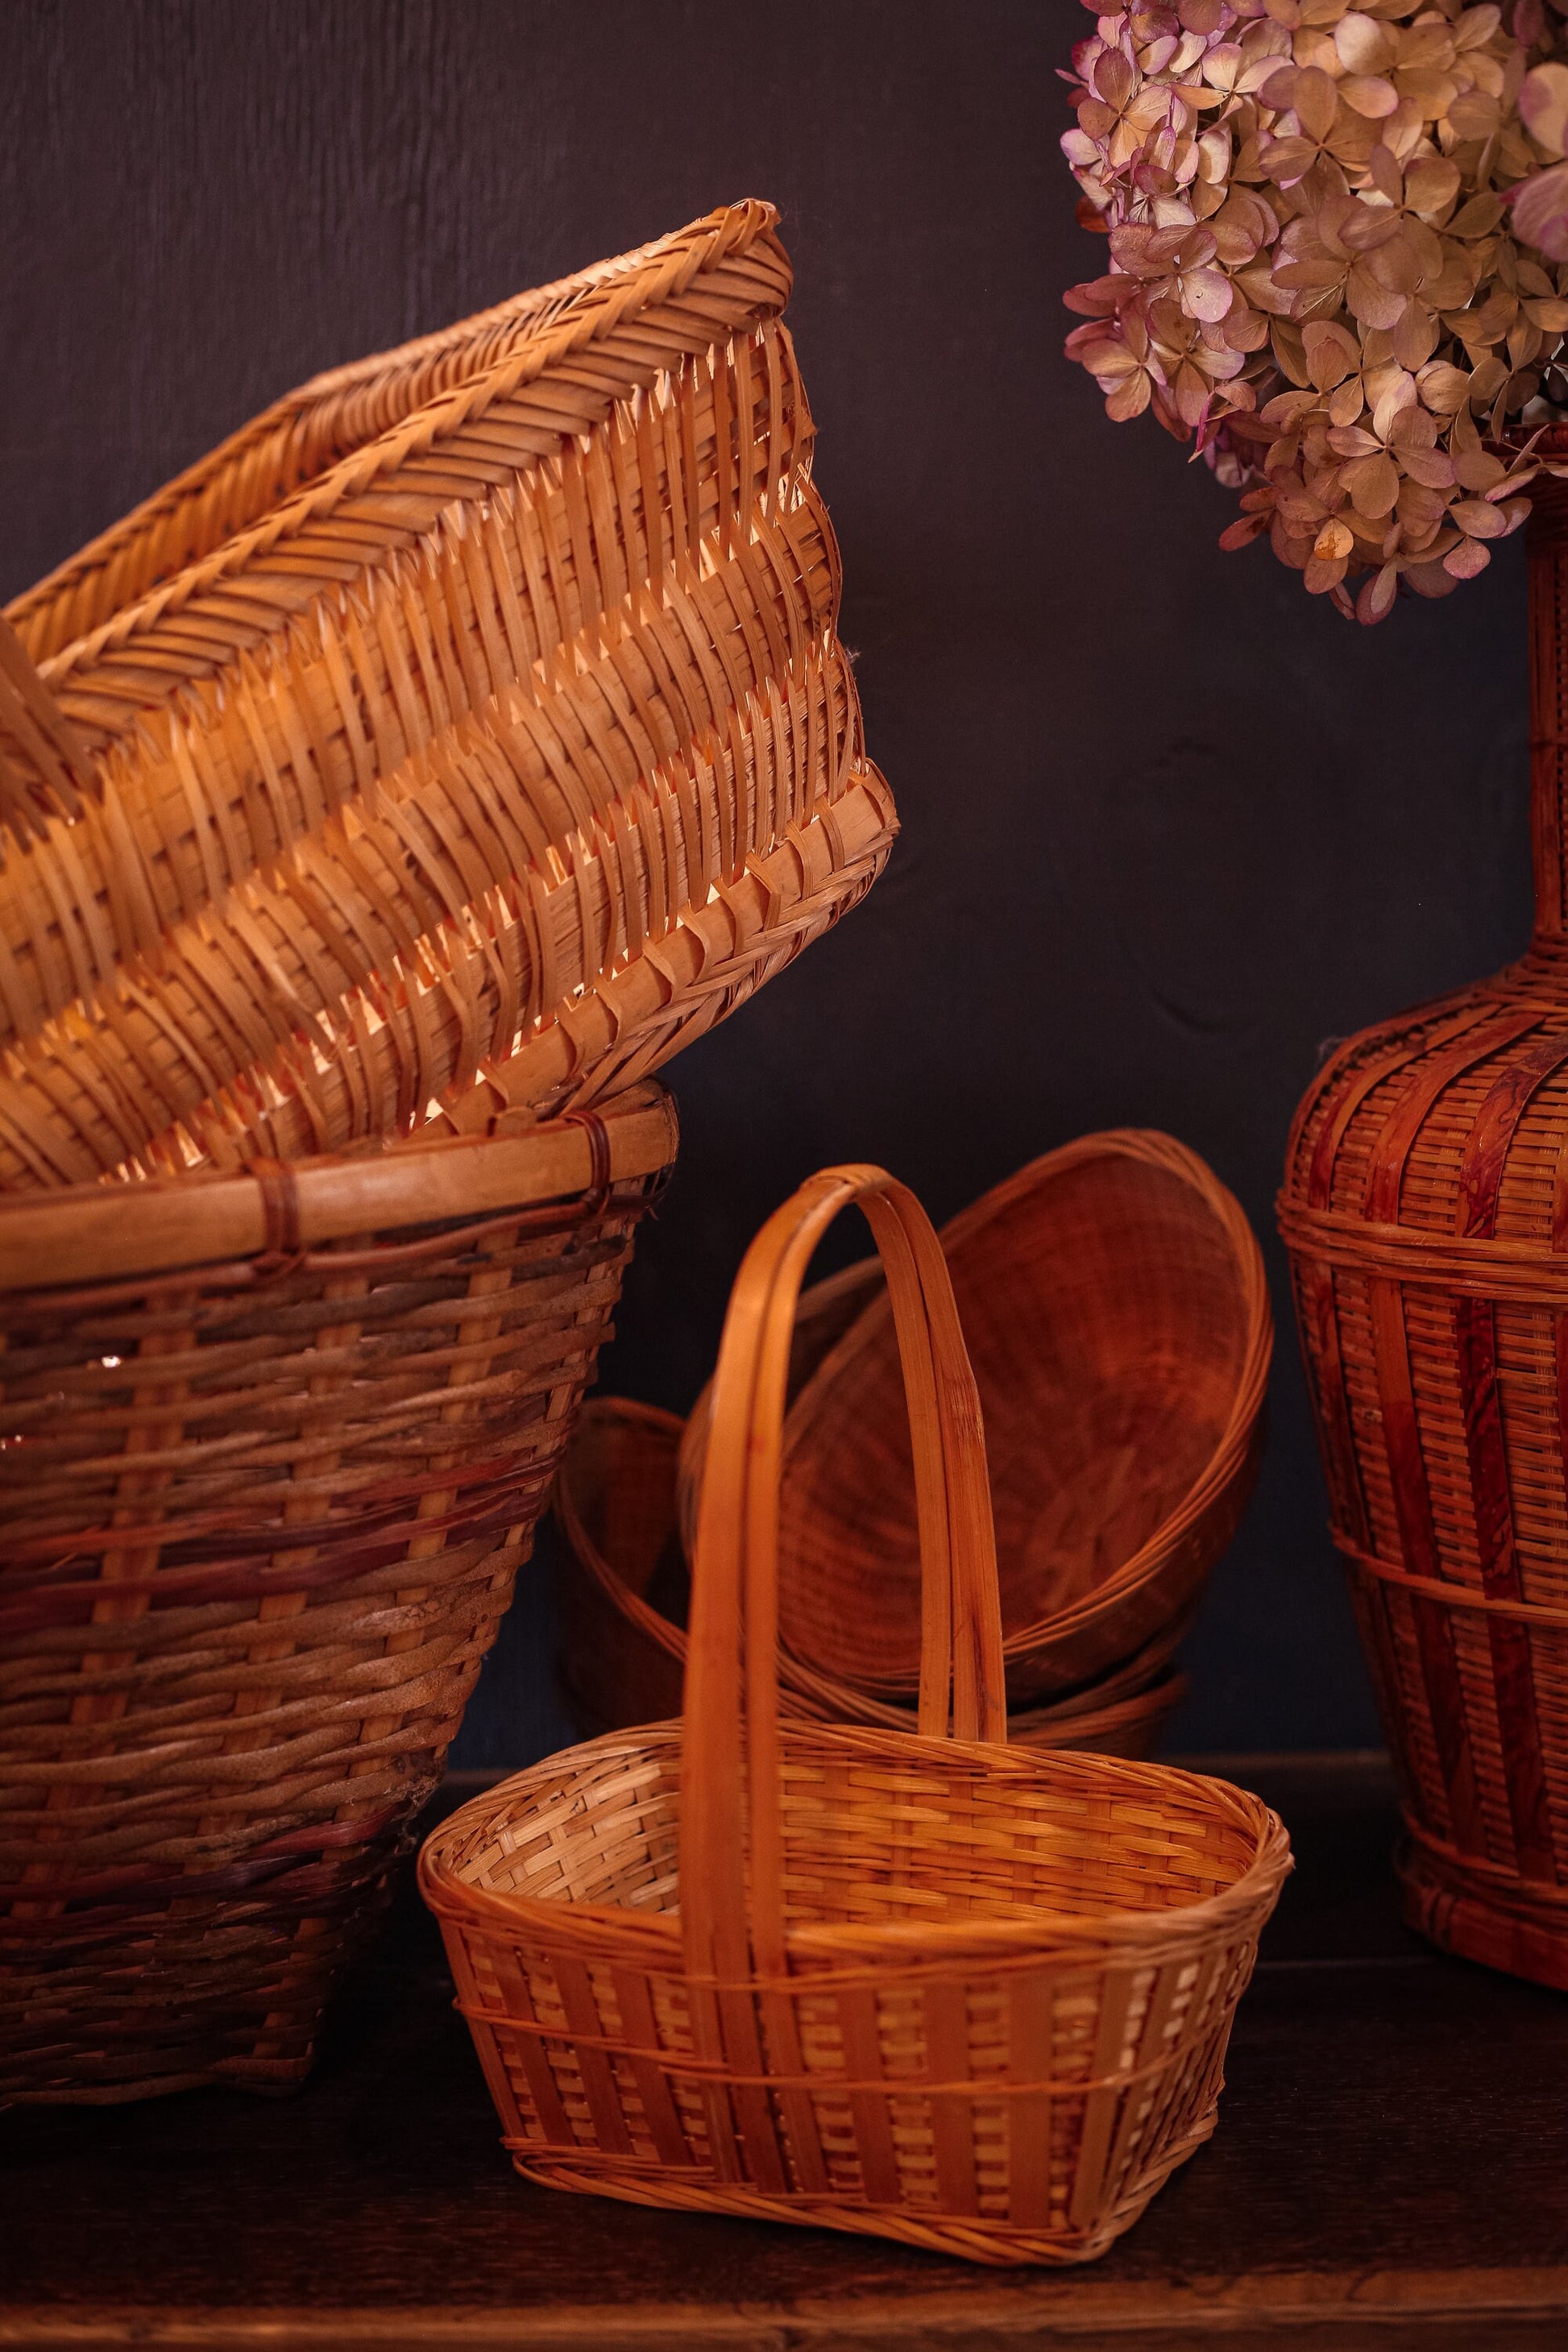 Small Wicker/Rattan Gathering Basket Rectangular Flat Bottom with Handle - Vintage Bamboo Fruit or Berry Harvesting Basket